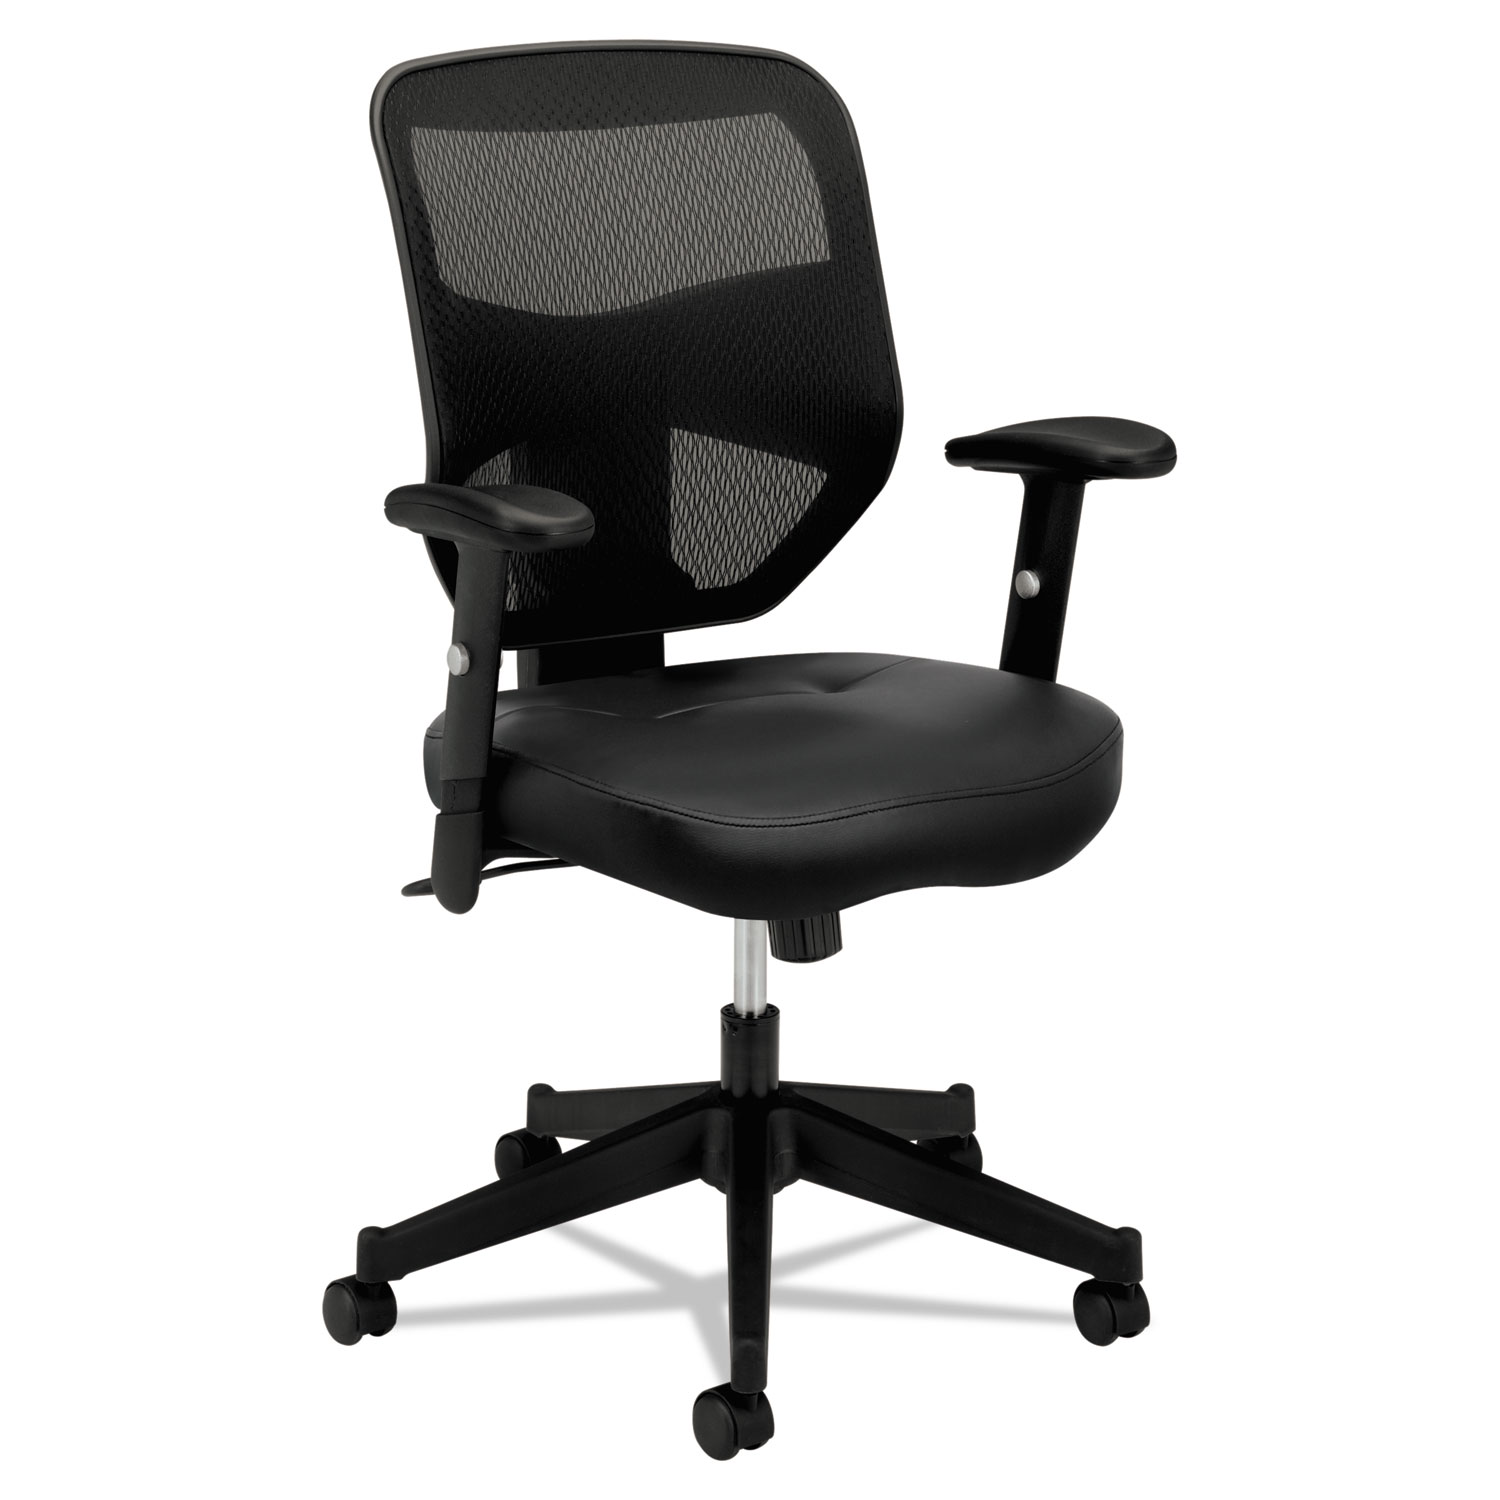  HON HVL531.SB11 VL531 Mesh High-Back Task Chair with Adjustable Arms, Supports up to 250 lbs., Black Seat/Black Back, Black Base (BSXVL531SB11) 